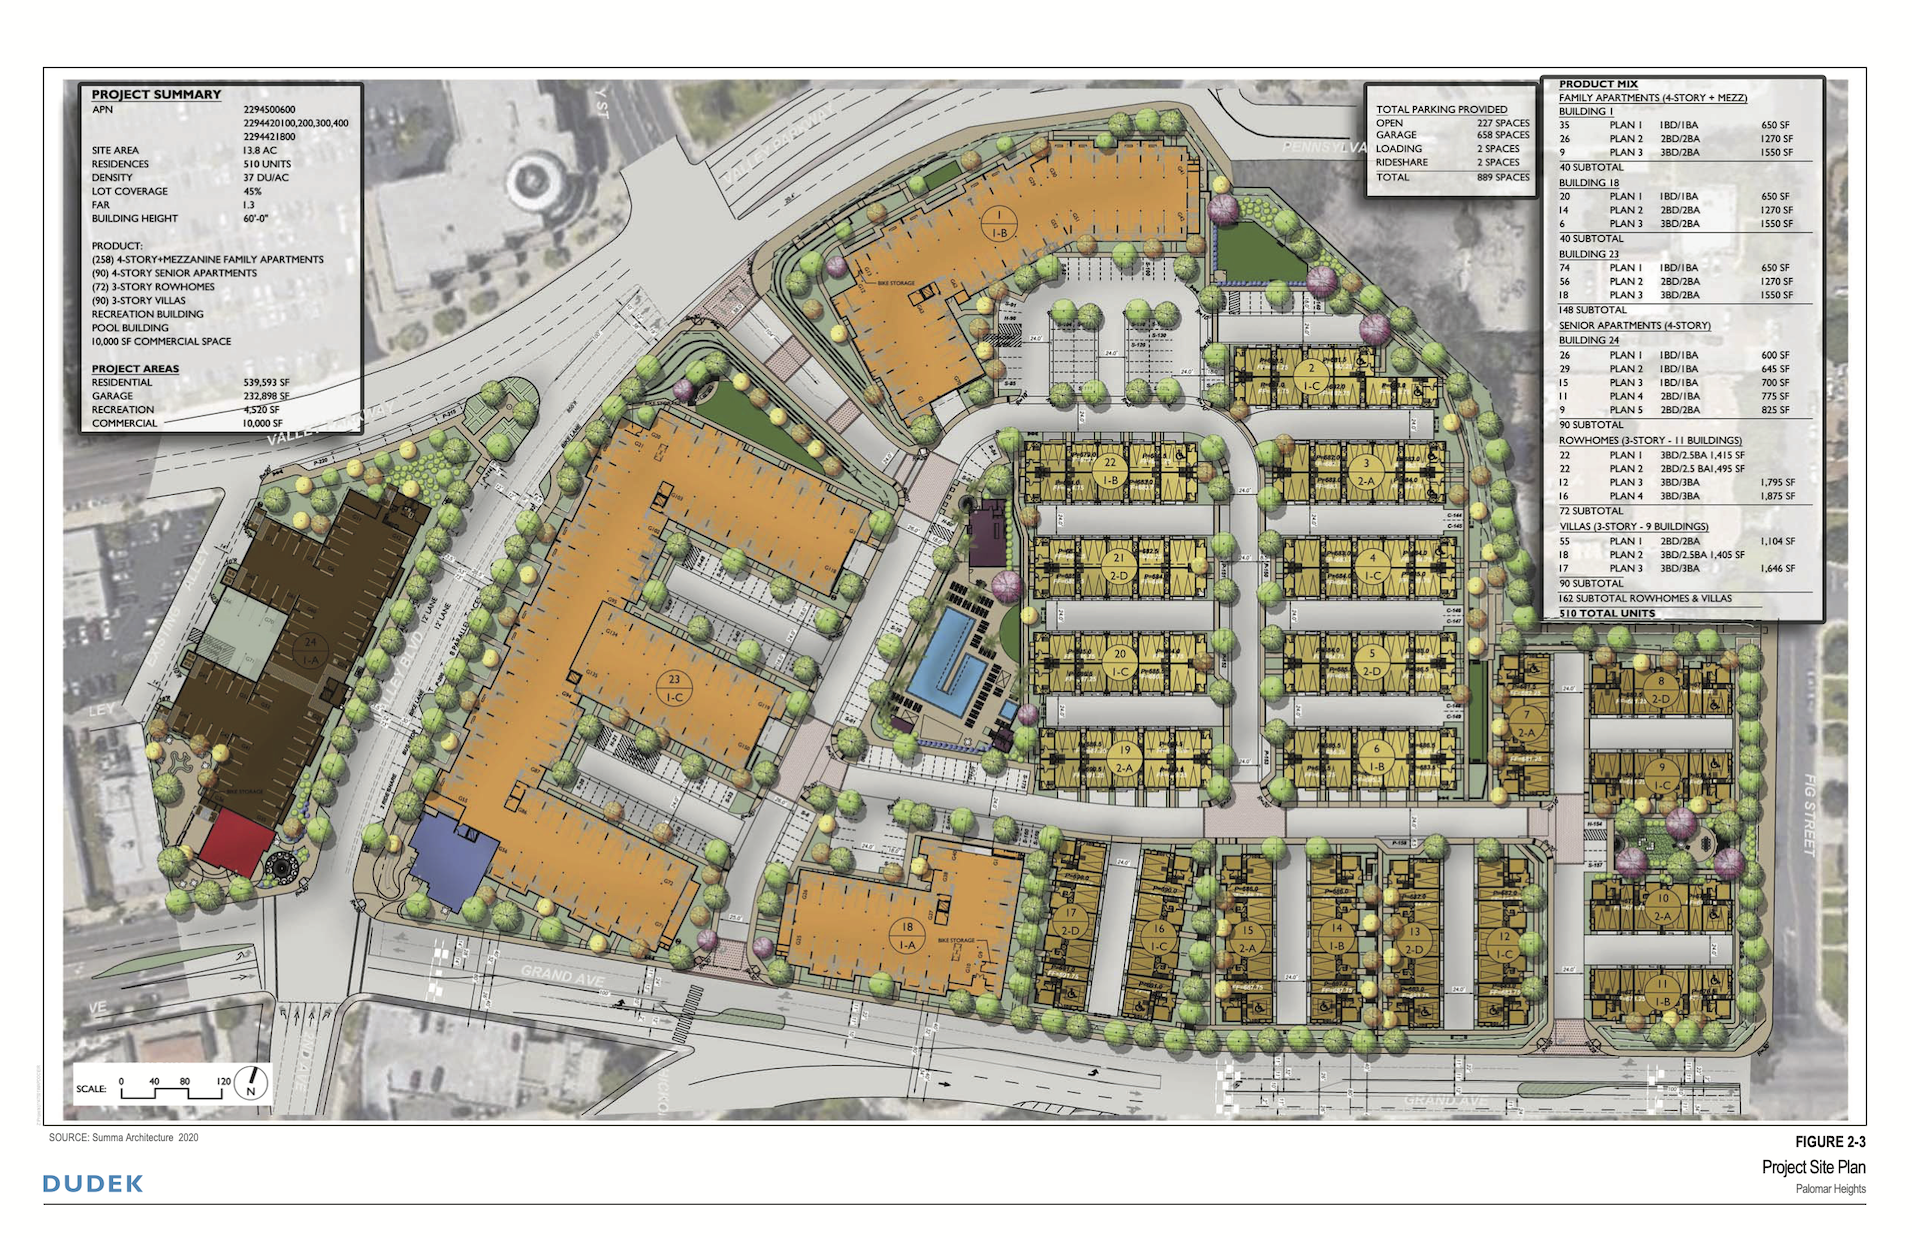 Palomar Heights proposal site plan